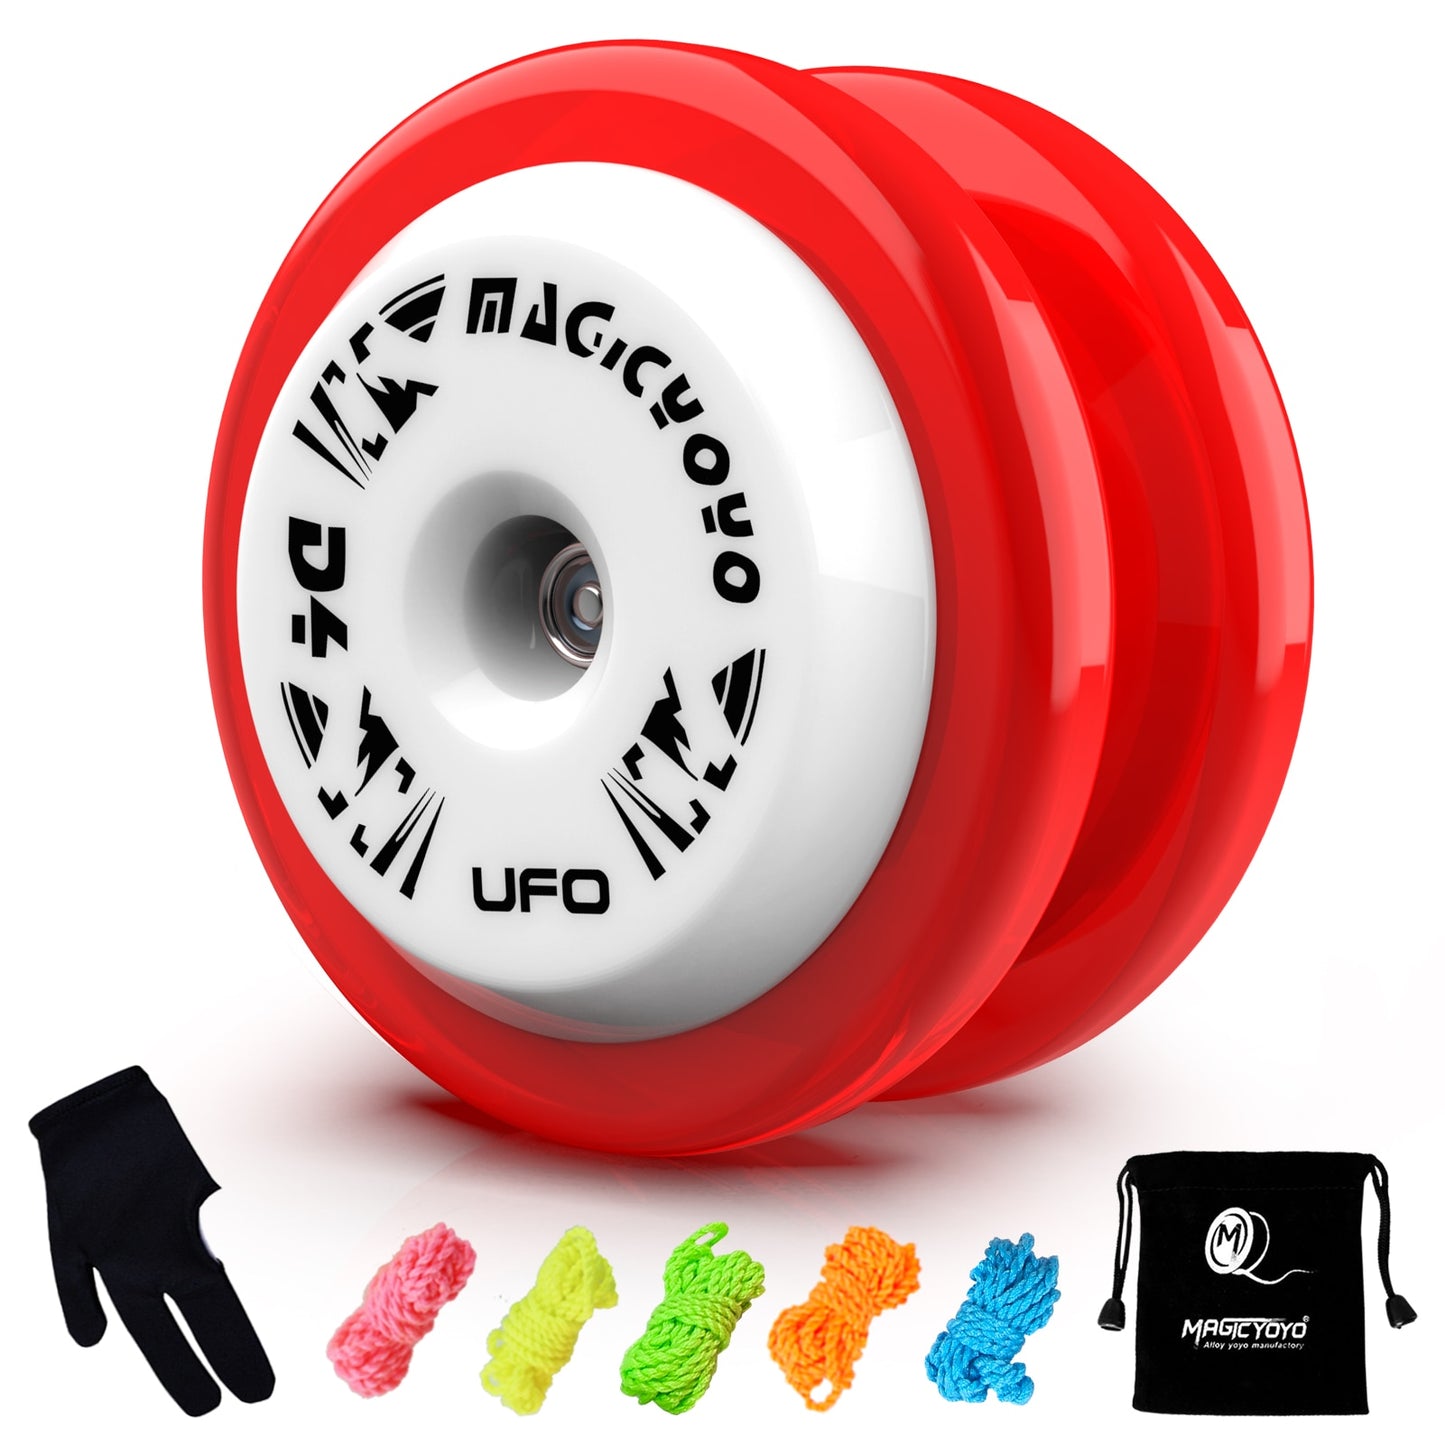 MAGICYOYO D4 UFO Responsive Yoyo, Professional Looping Yo Yo for Kits Beginner, Plastic Yo-Yo Great for 2A Tricks